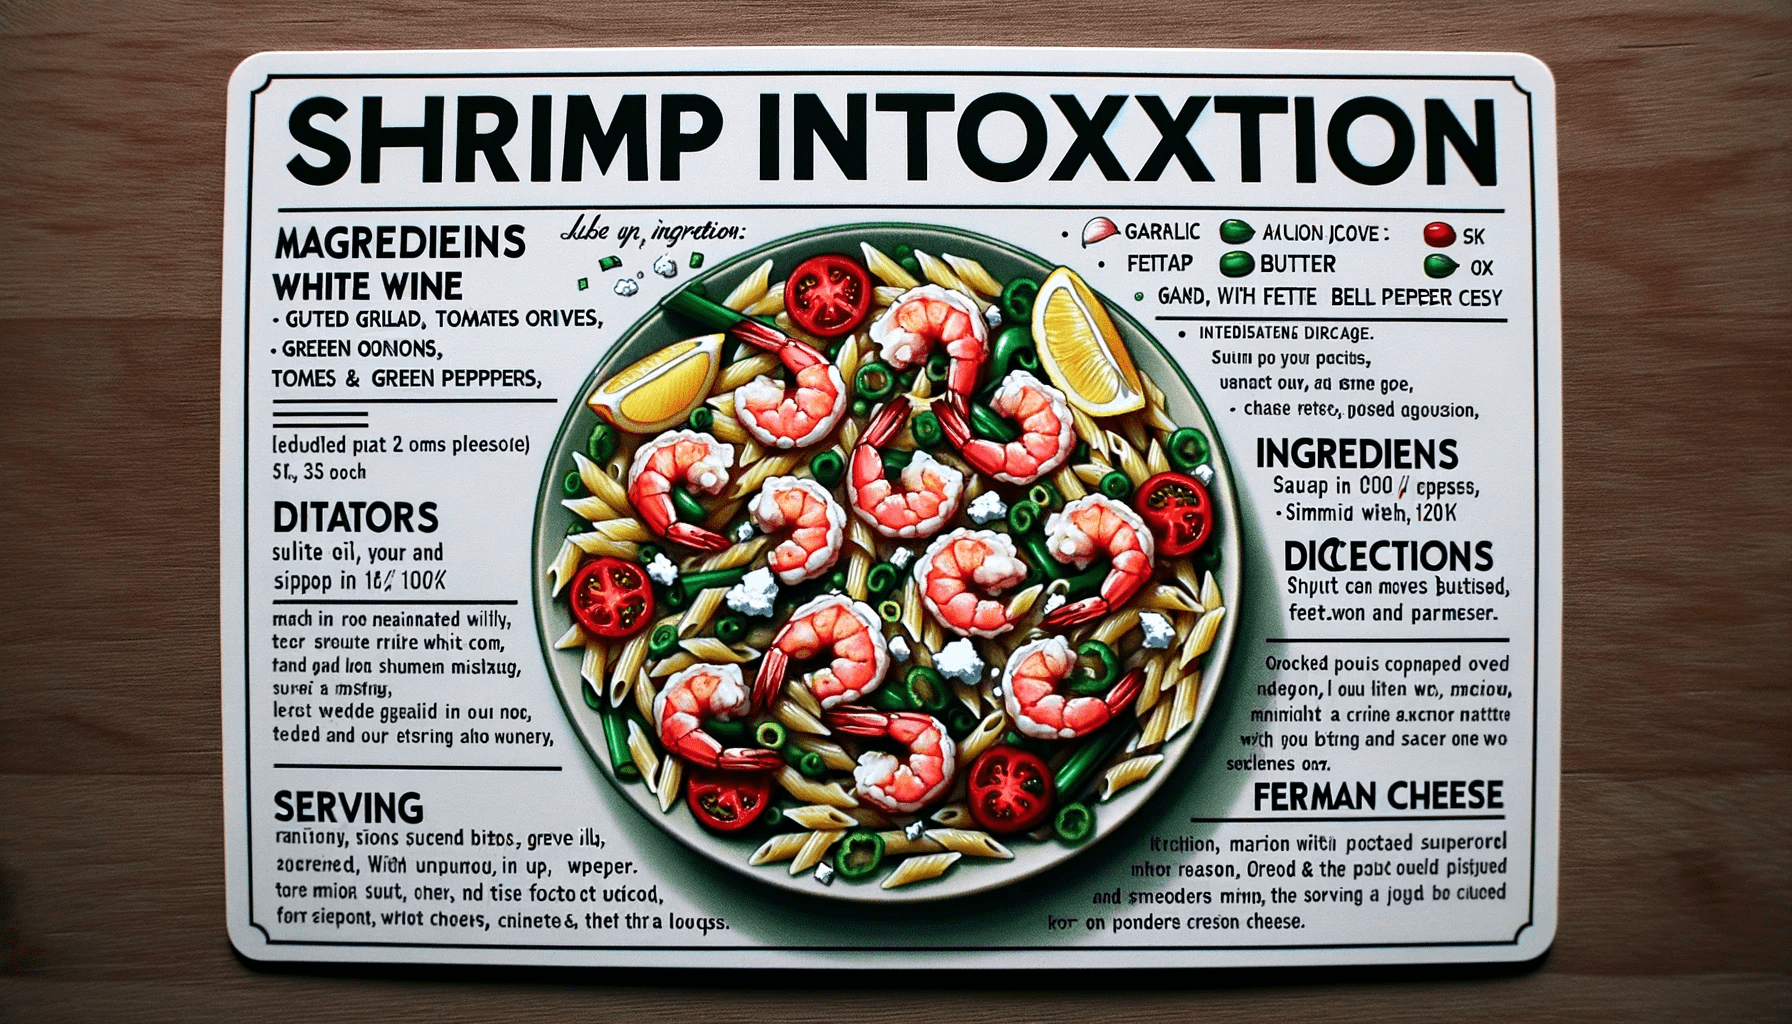 Shrimp Intoxication